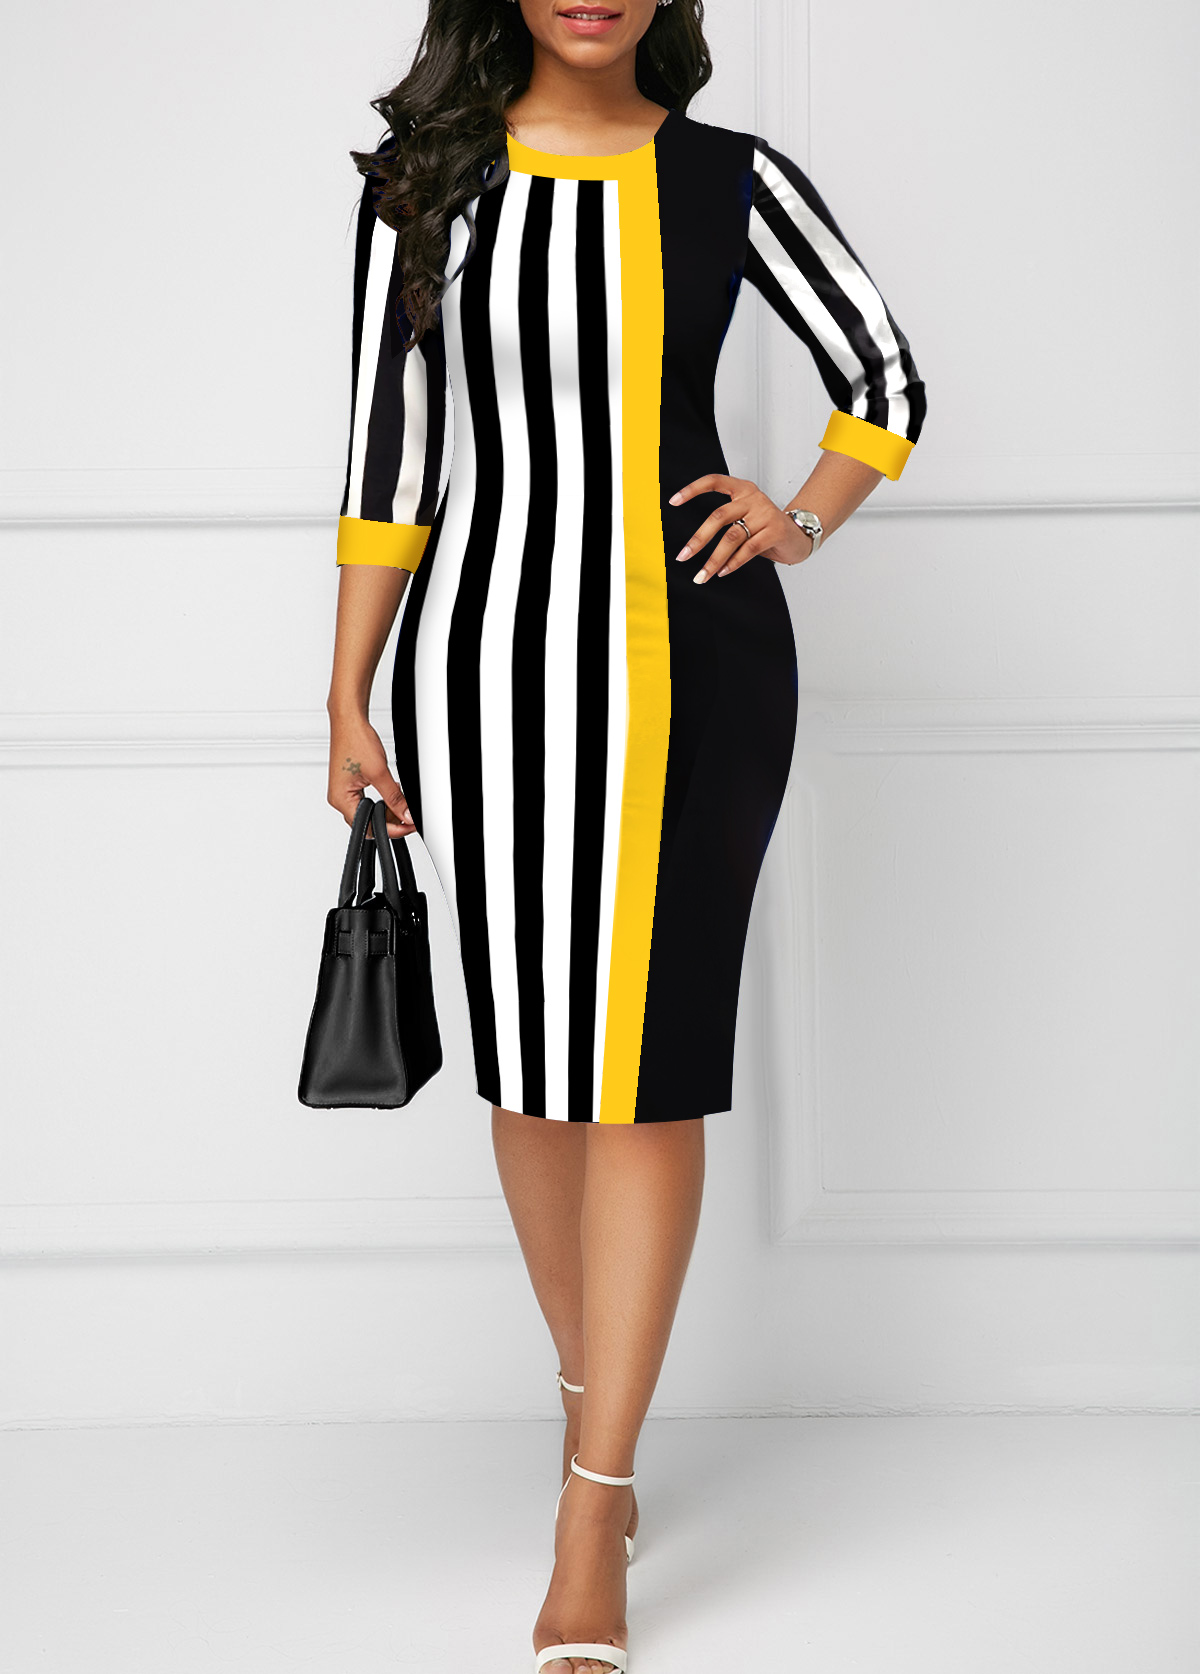 Black Striped Three Quarter Length Sleeve Bodycon Dress